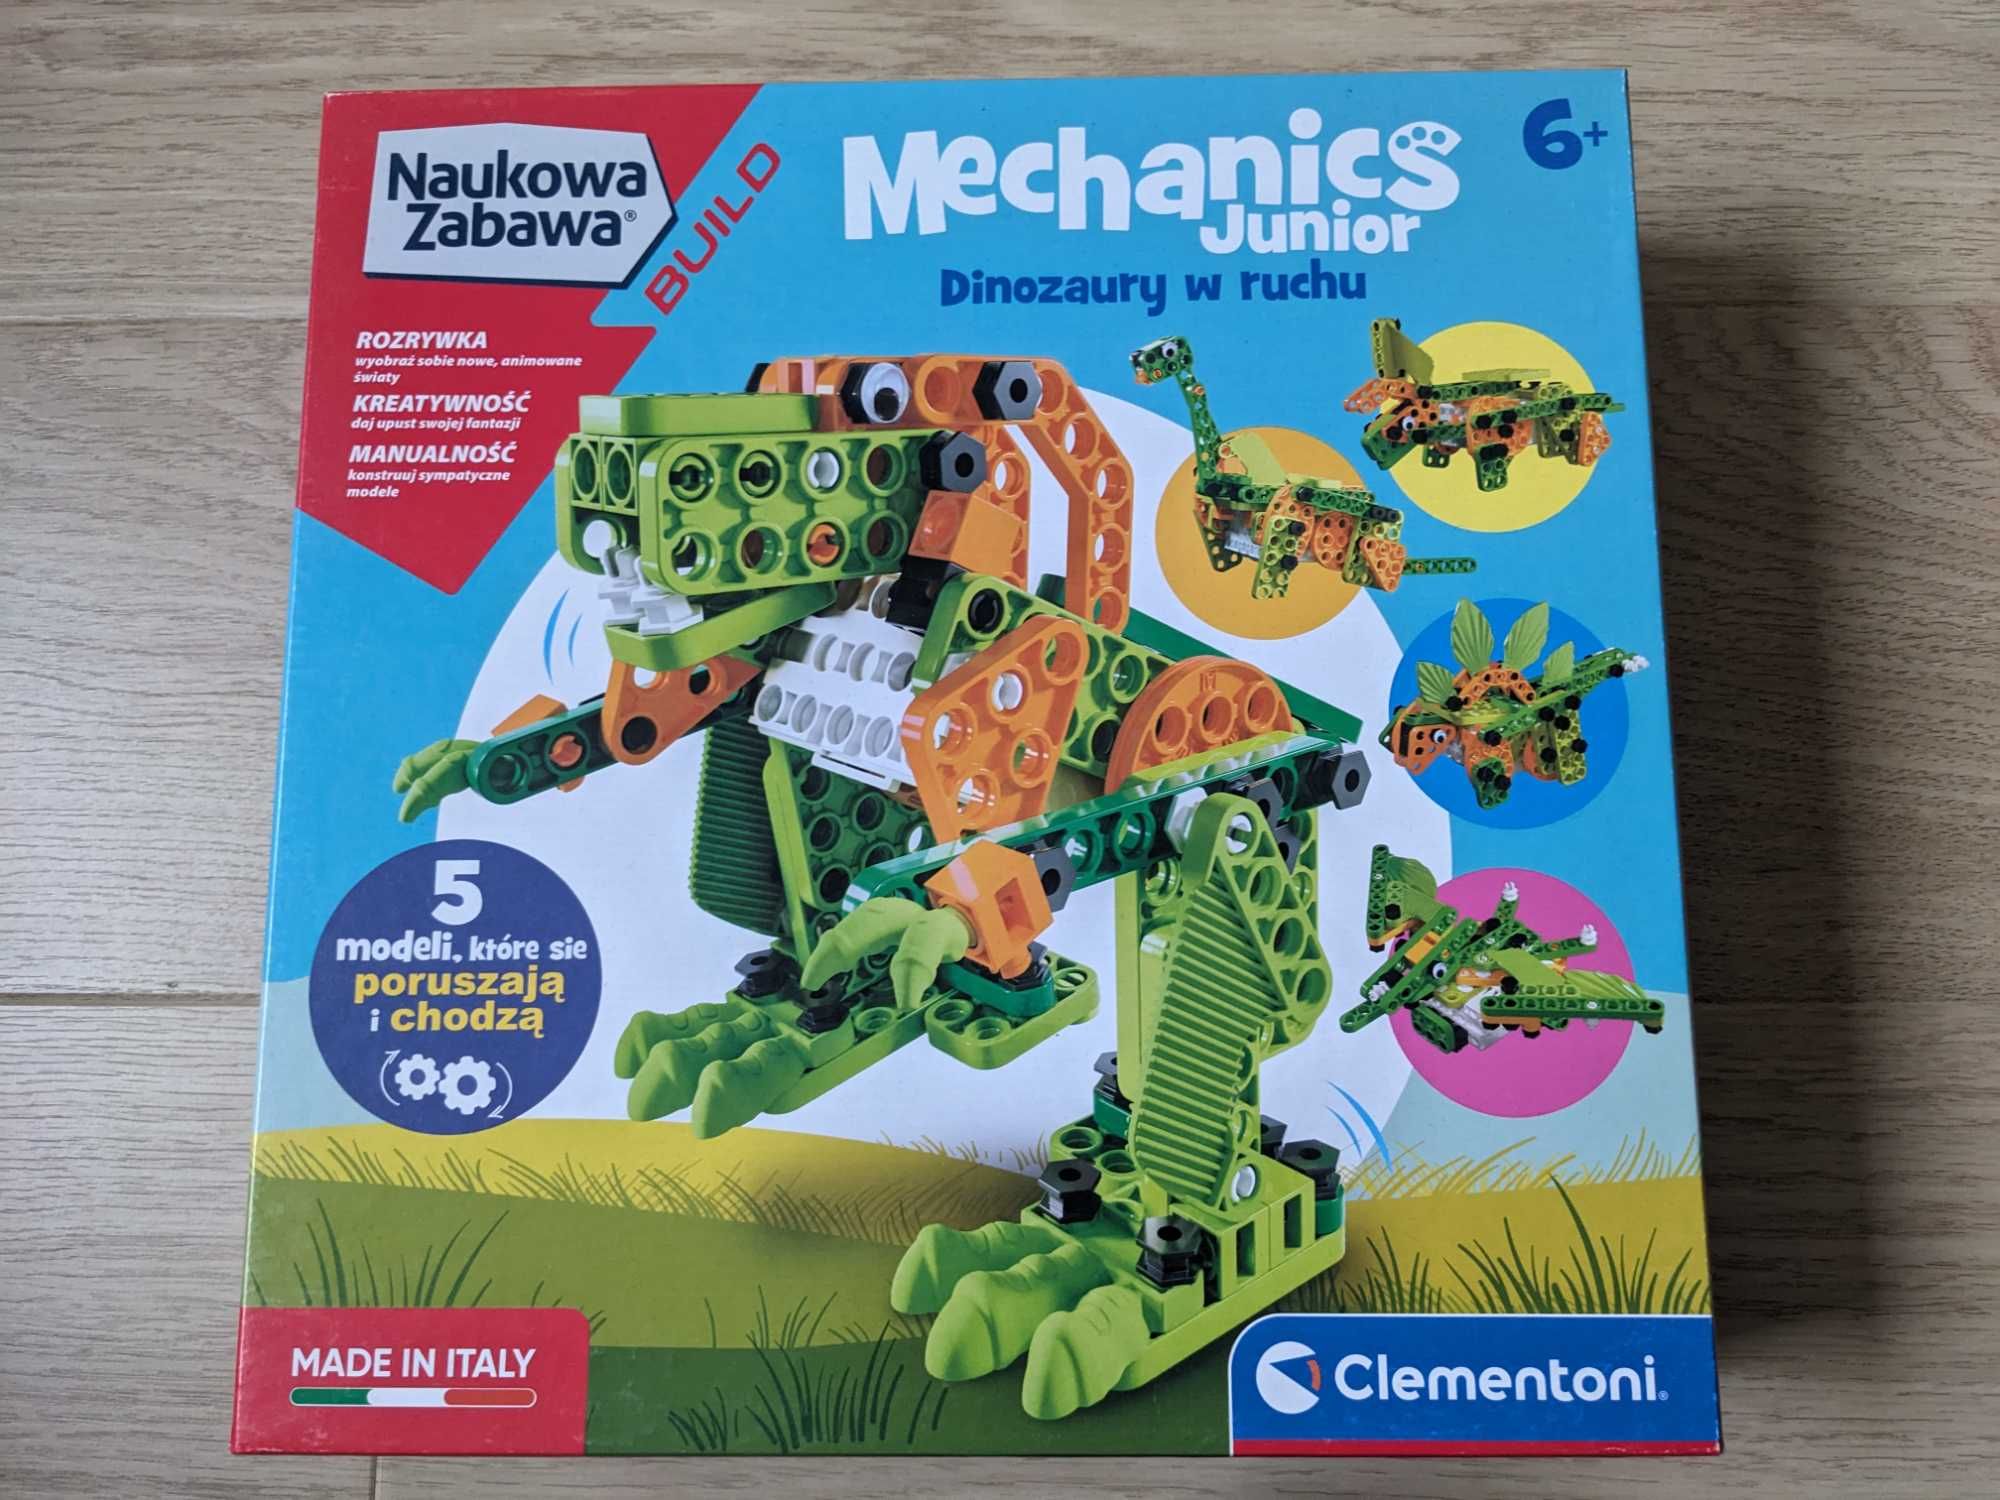 Klocki Clementoni Mechanics Junior 6+ Dinozaury w ruchu